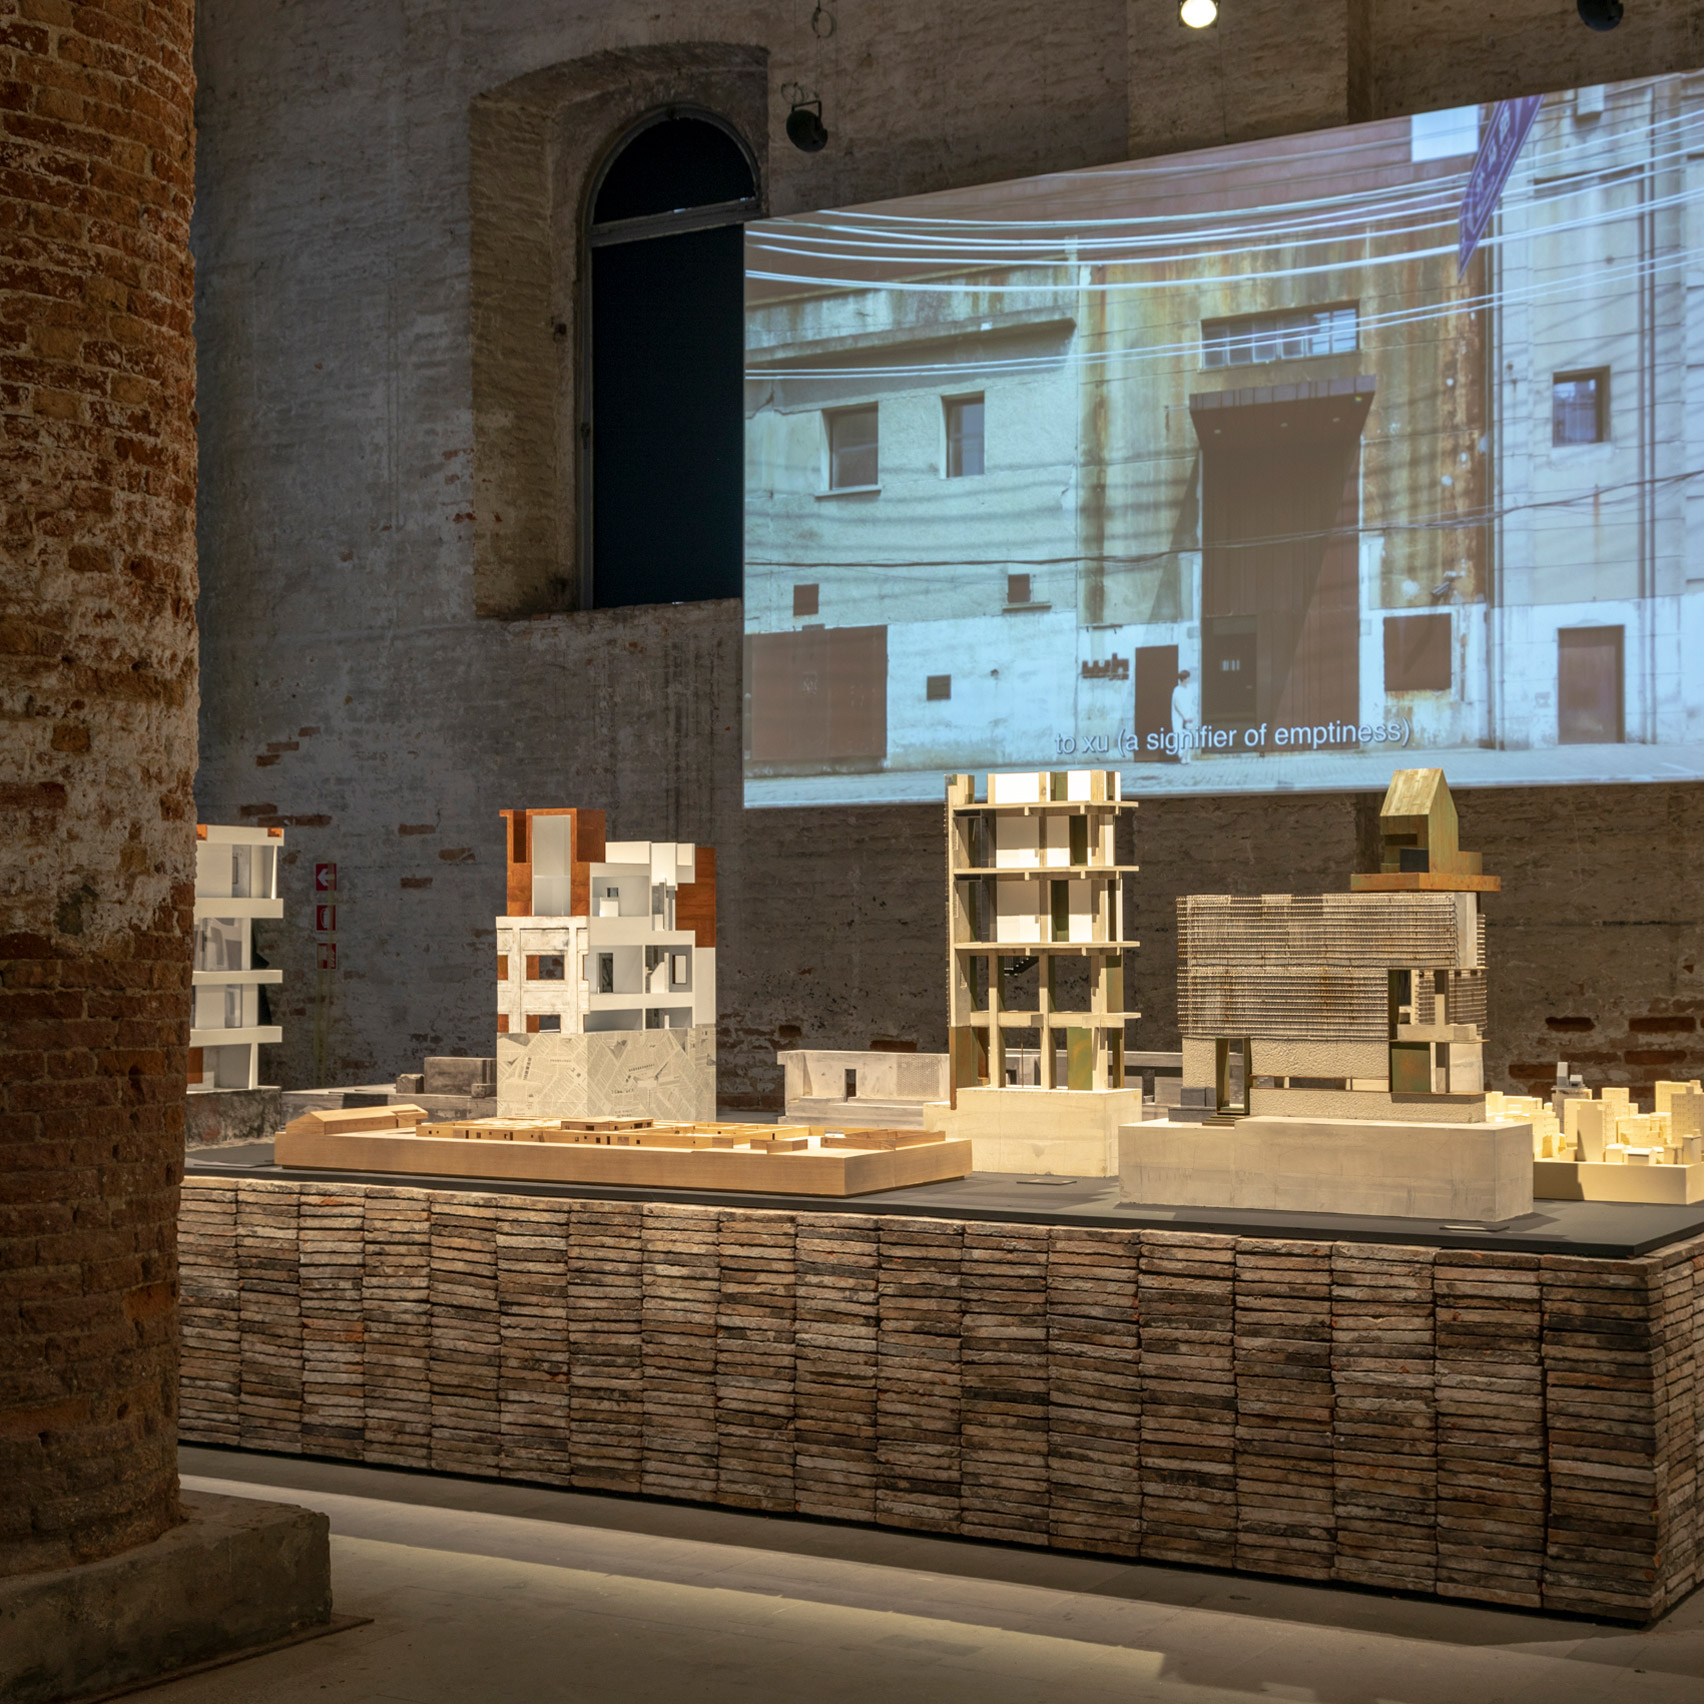 Liminality by Neri&Hu at Venice Architecture Biennale